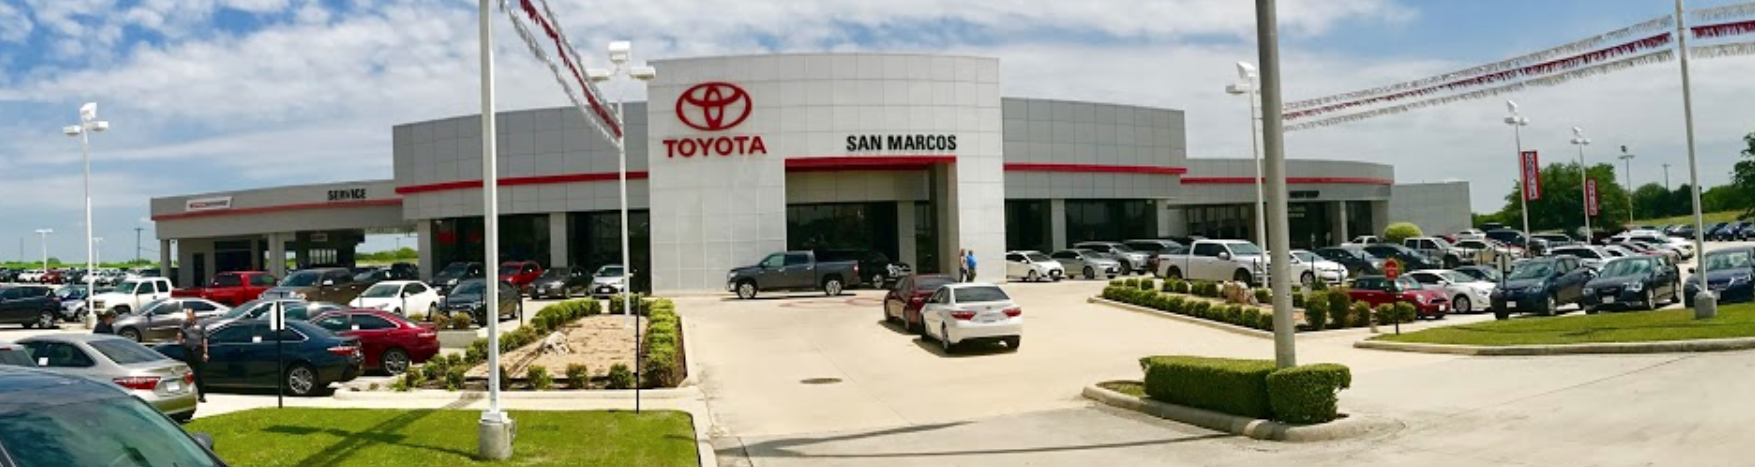 San marcos Toyota dealership